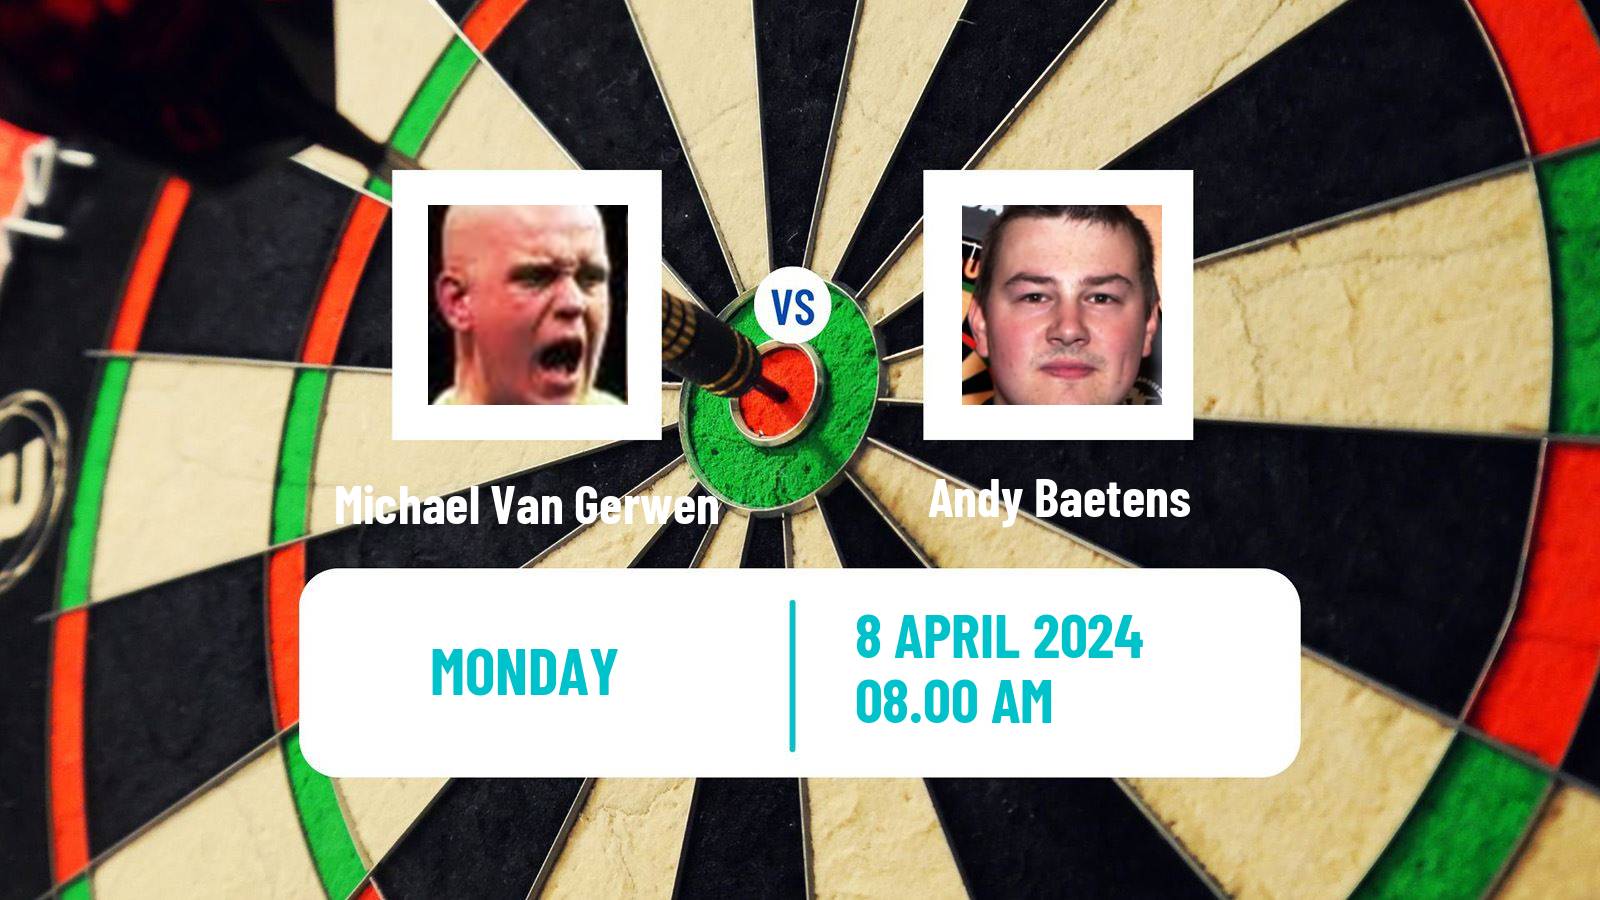 Darts Players Championship 7 Michael Van Gerwen - Andy Baetens